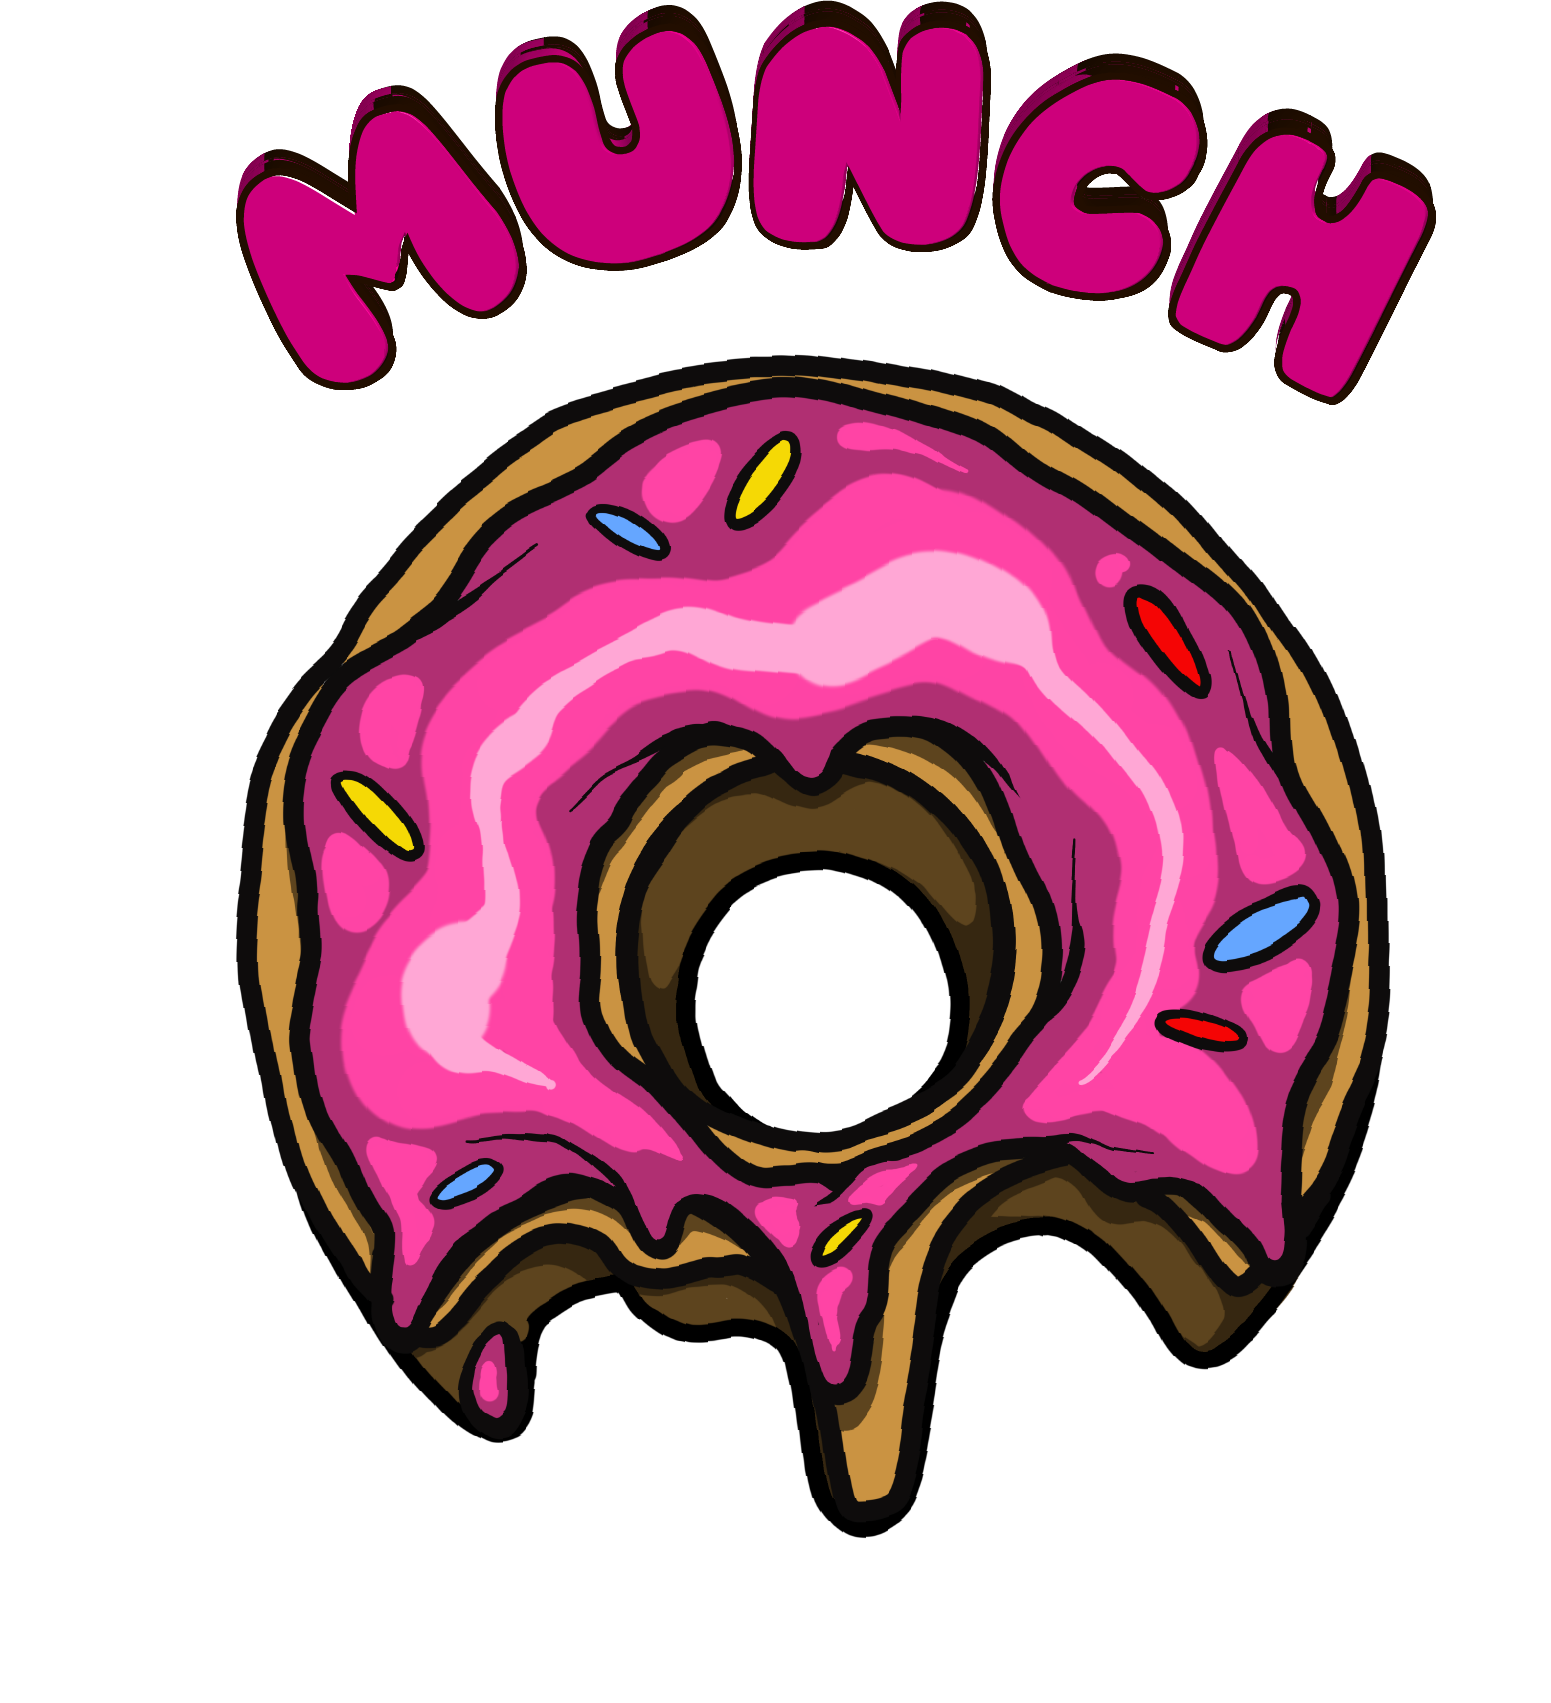 Munch Token ($MUNCH), The real defi, ethereum token for